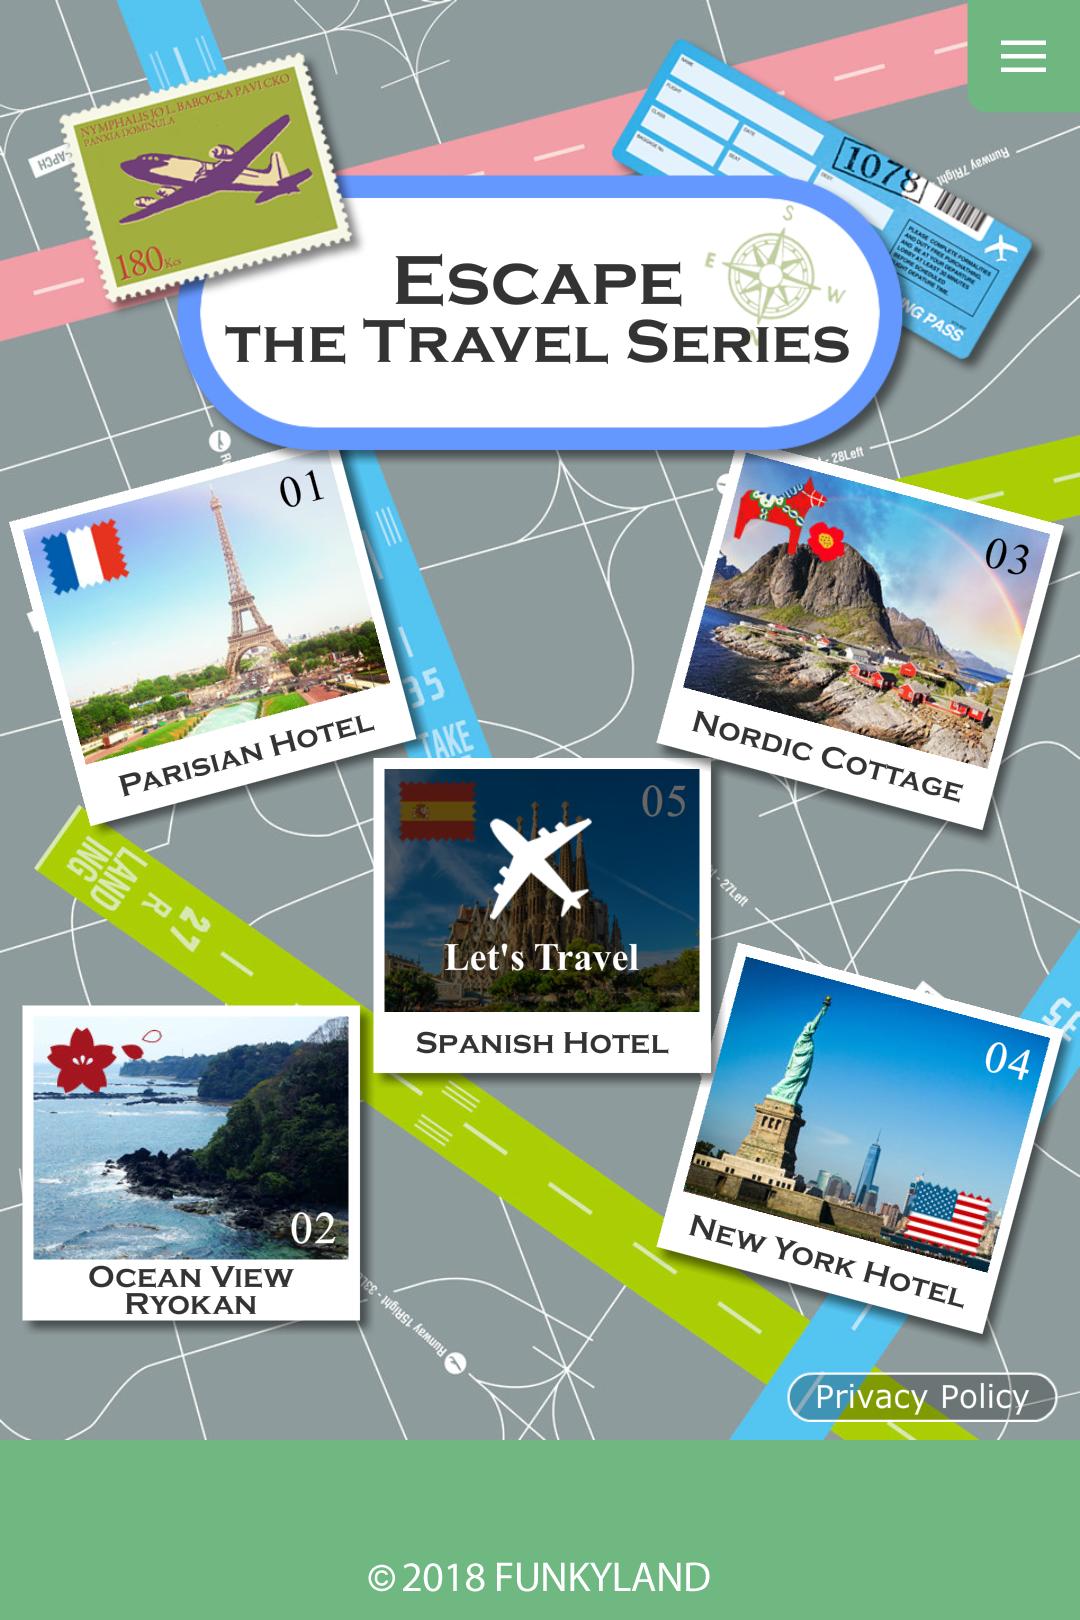 Travel series